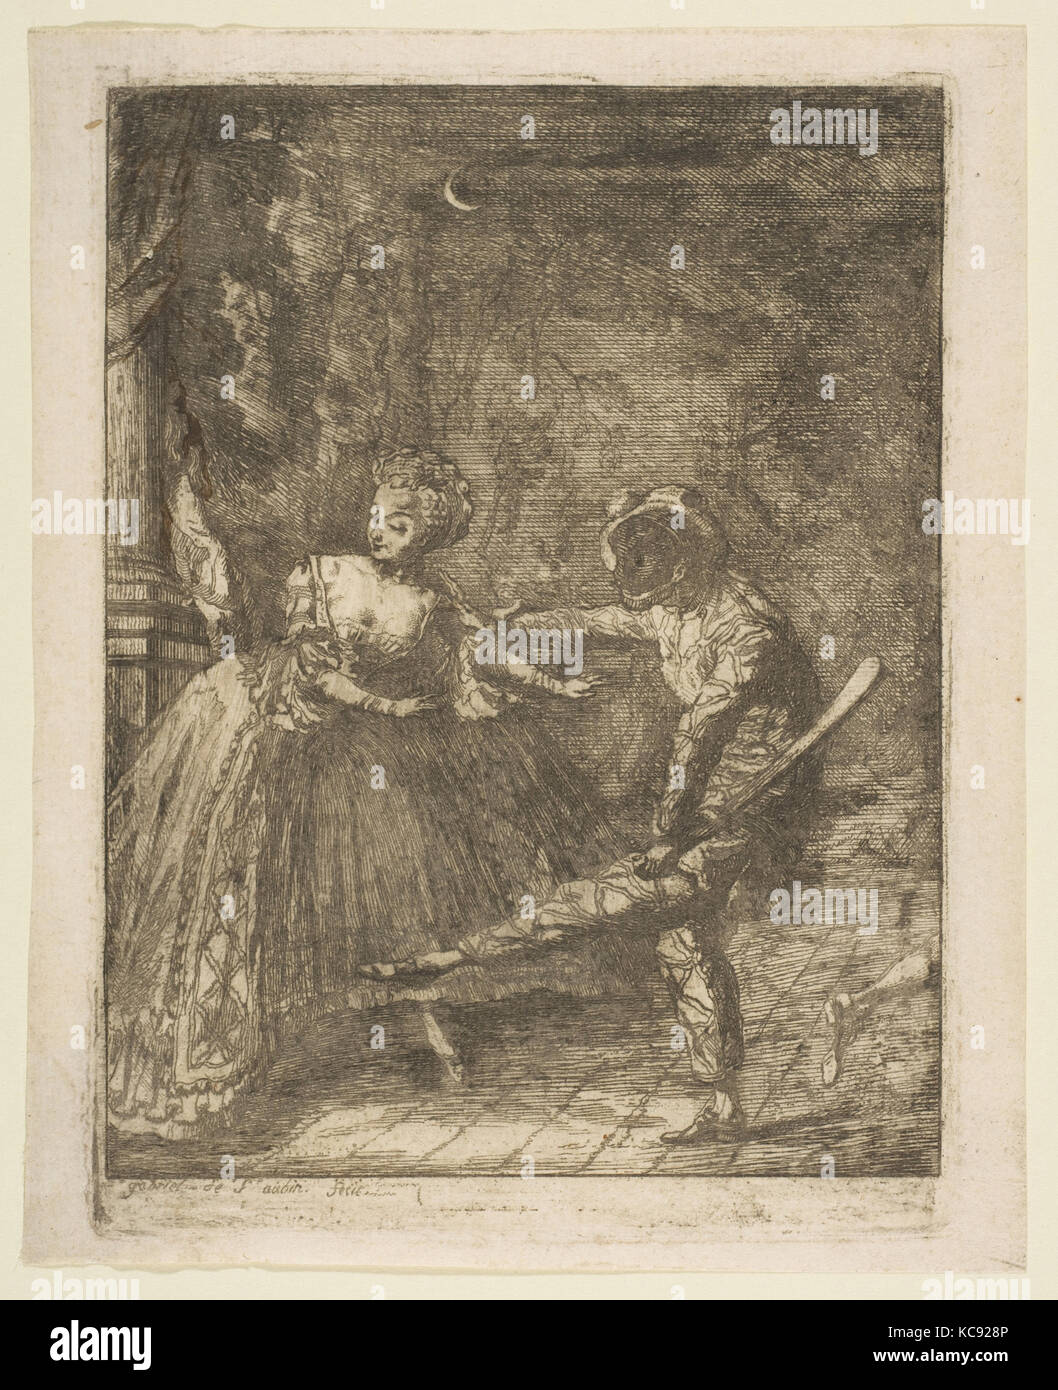 Le Theatre Italien, Etching, before first state, sheet: 6 7/16 x 5 3/16 in. (16.3 x 13.2 cm), Prints, Gabriel de Saint-Aubin Stock Photo